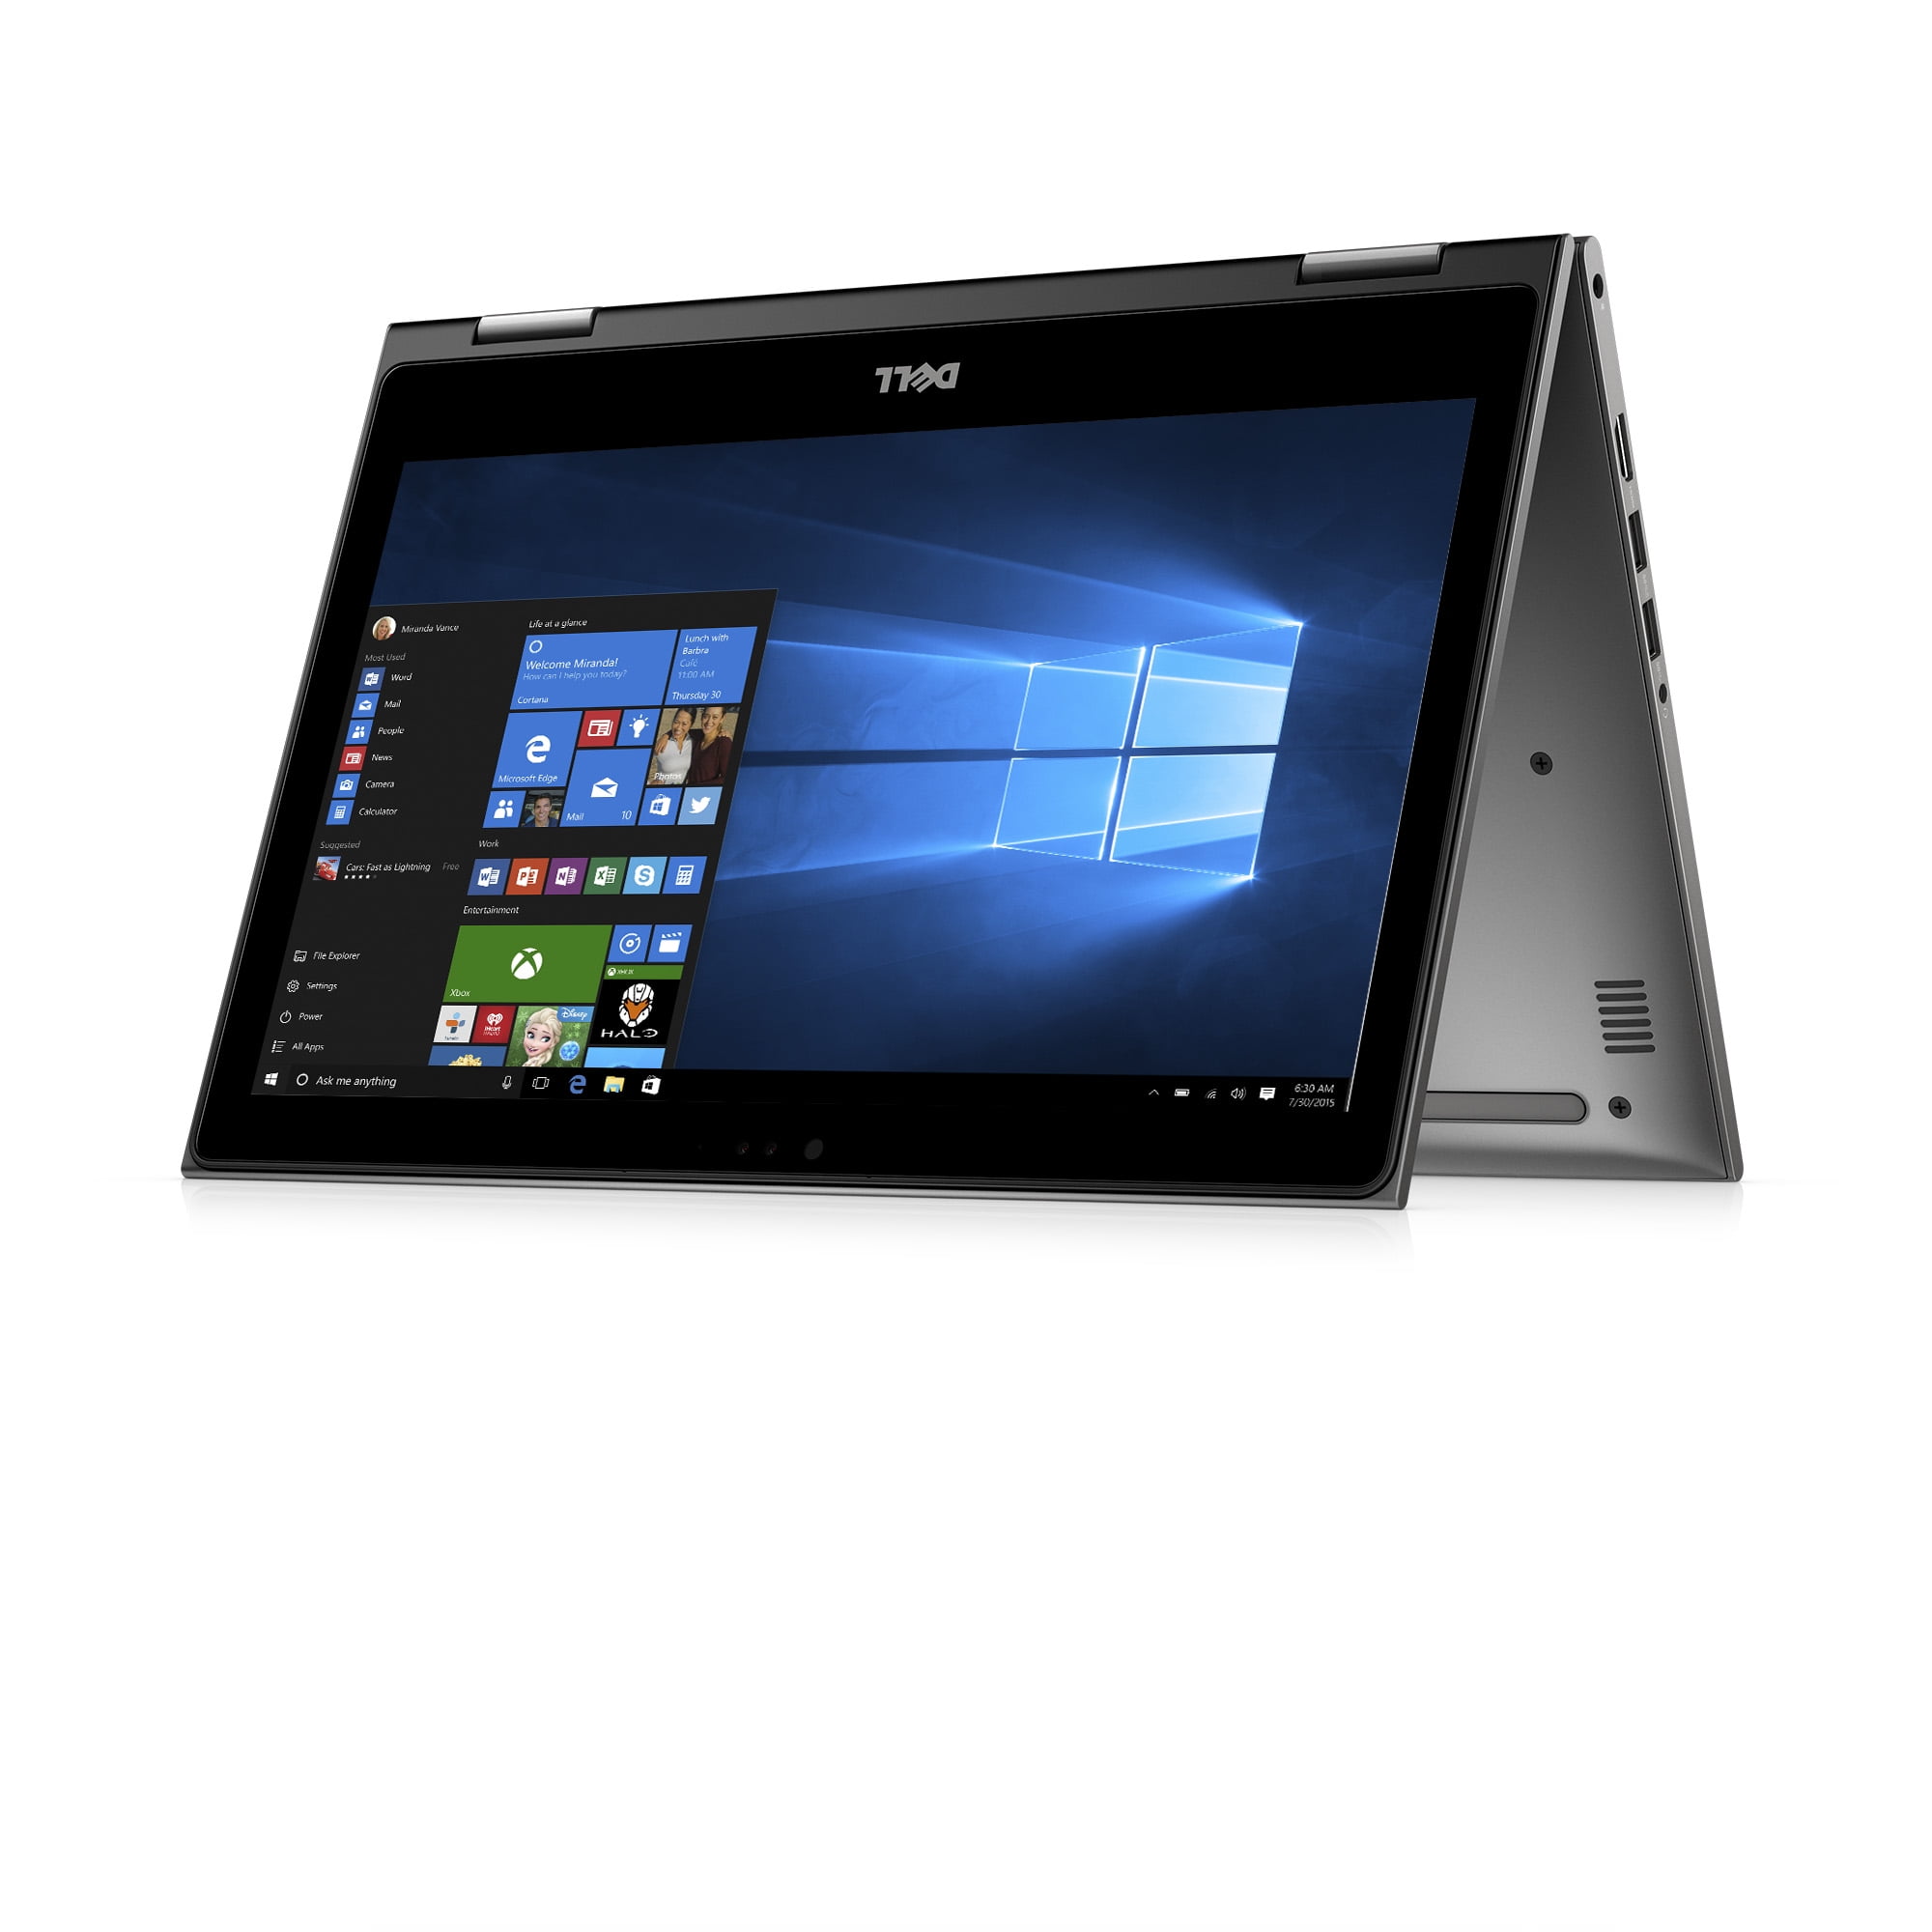 Dell Inspiron 13 5000 2 In 1 Touch 13 3 Intel Pent 4415u 4gb Memory 1tb 5400 Rpm Hd Intel Hd Graphics 610 Walmart Com Walmart Com